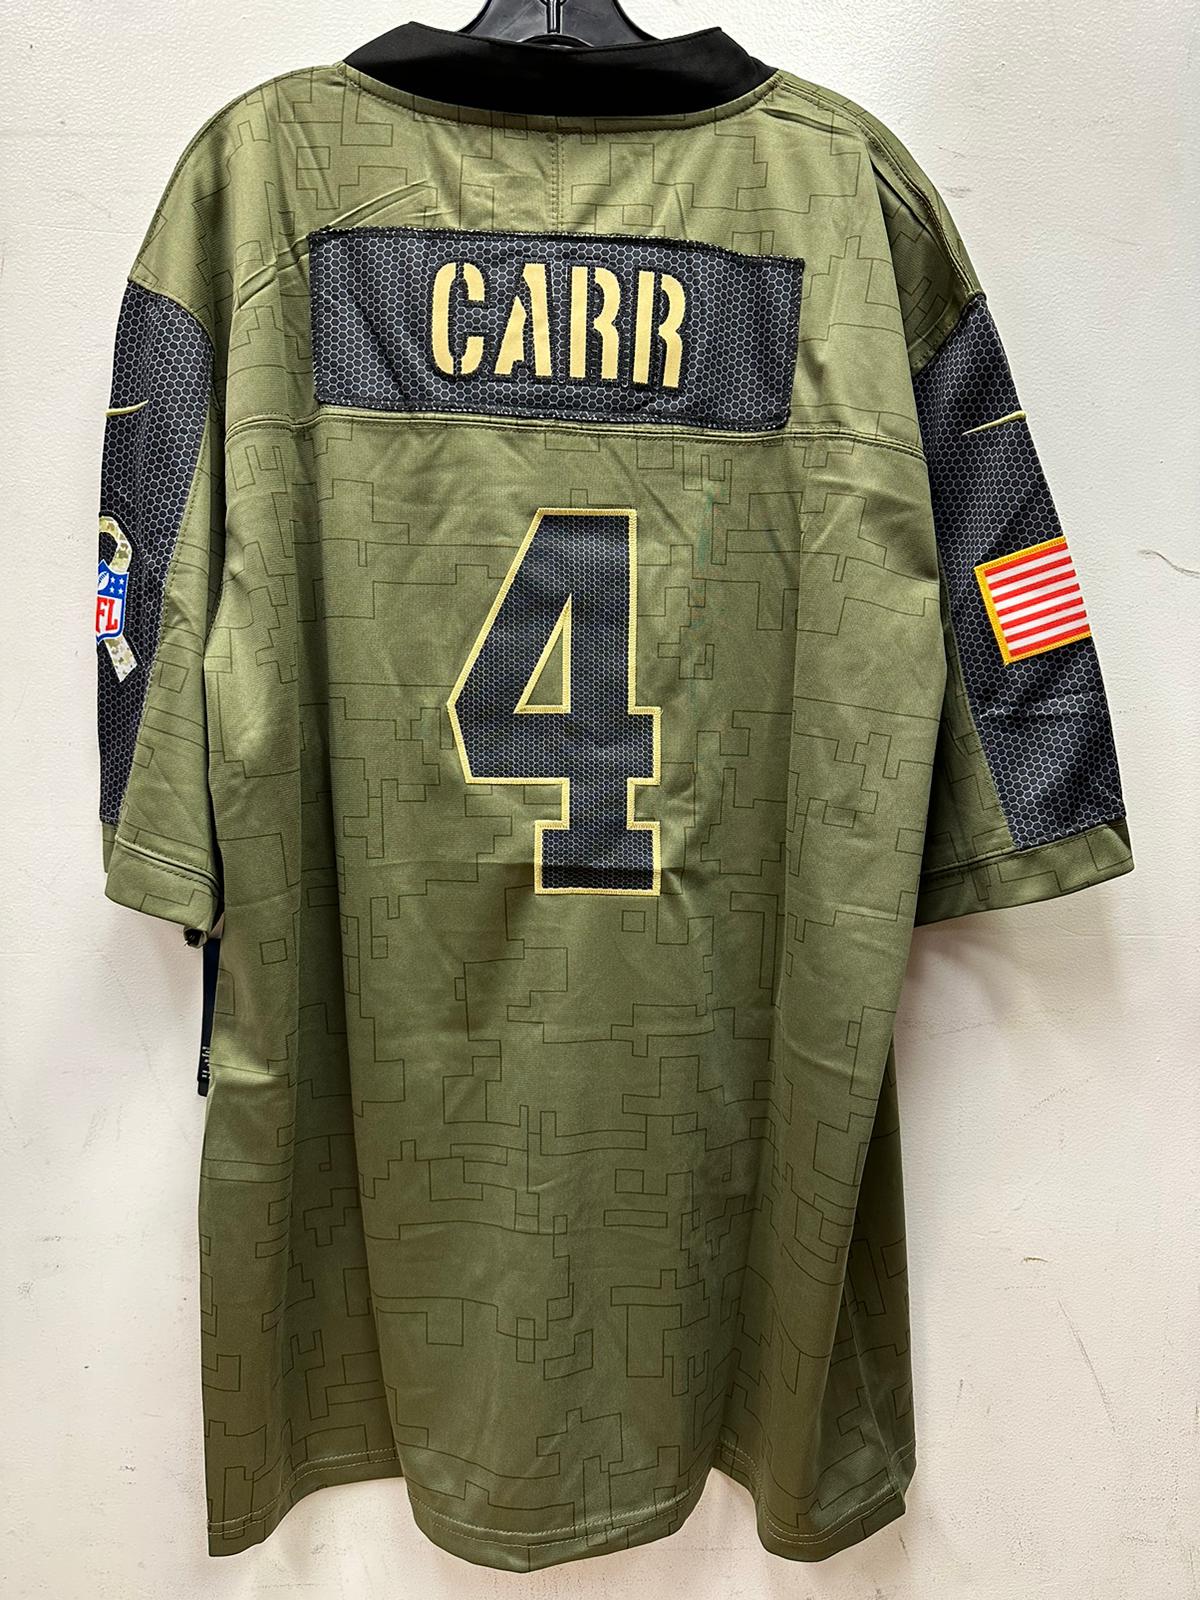 Derek Carr New Orleans Saints Salute to Service Jersey – Classic